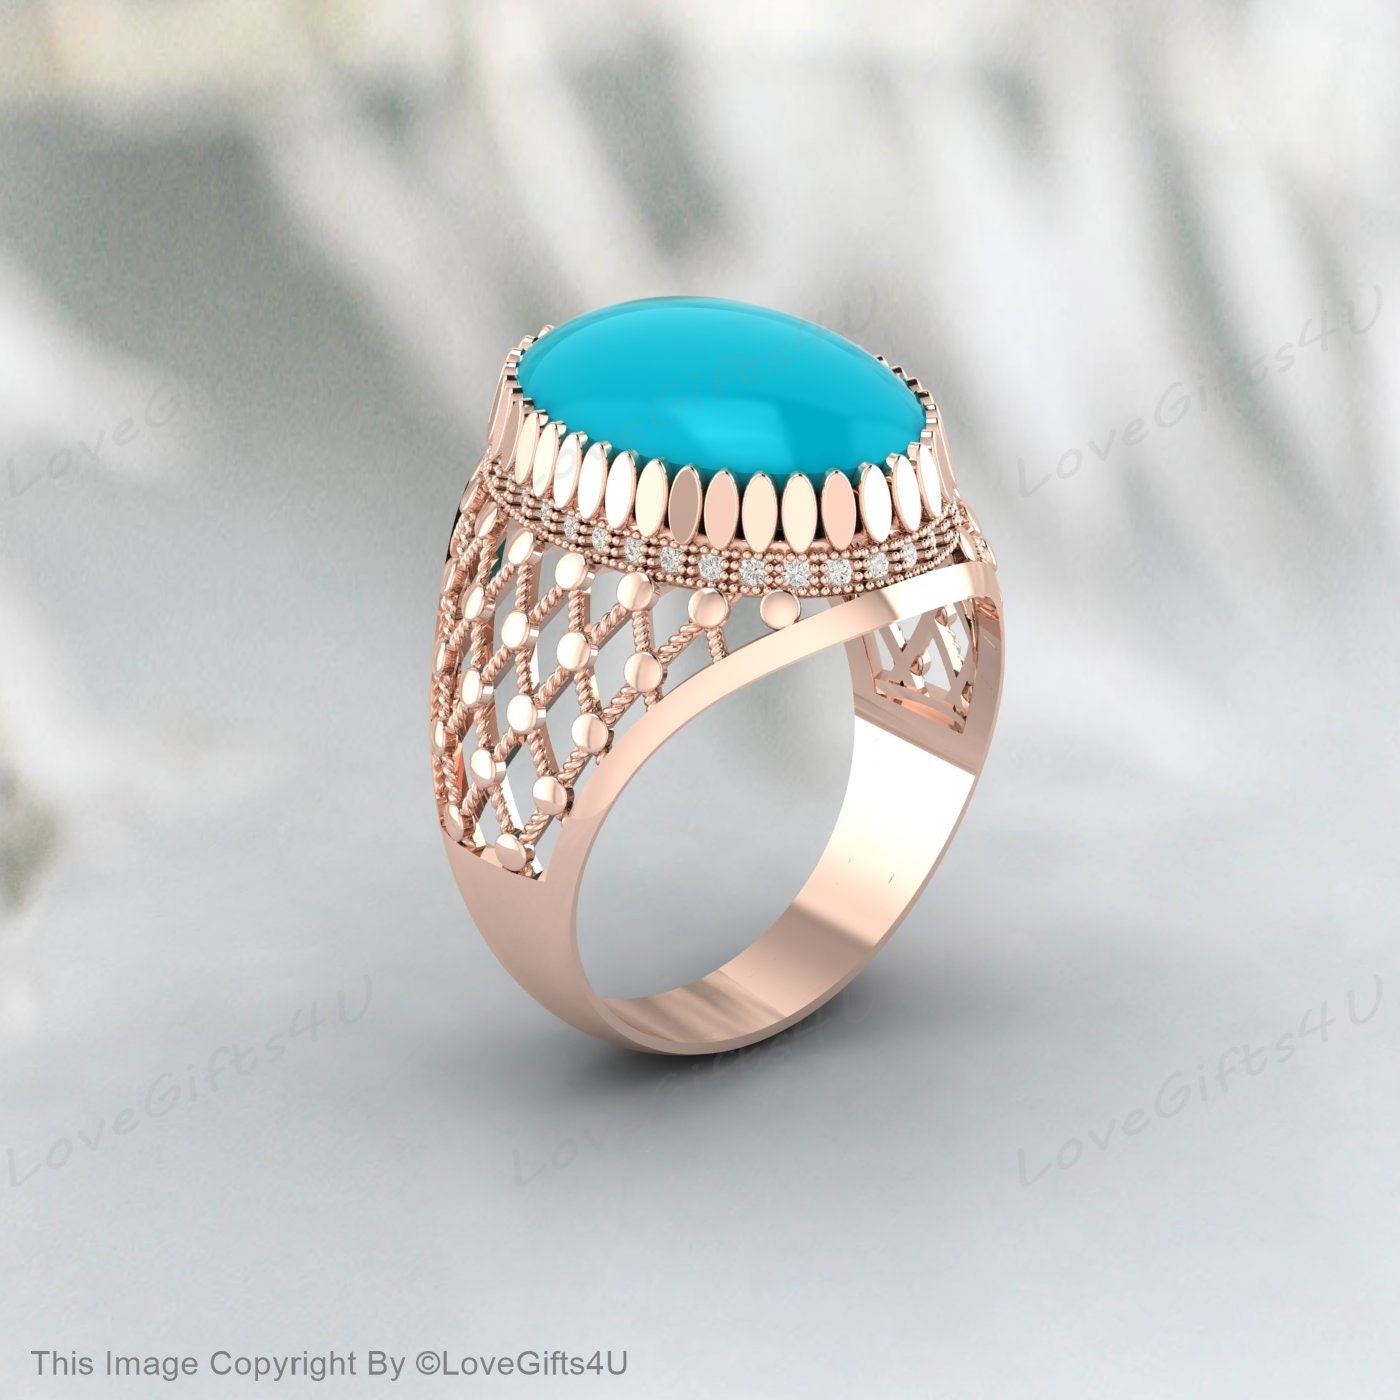 Rings Portal - Real Turquoise Ring mens feroza stone... | Facebook